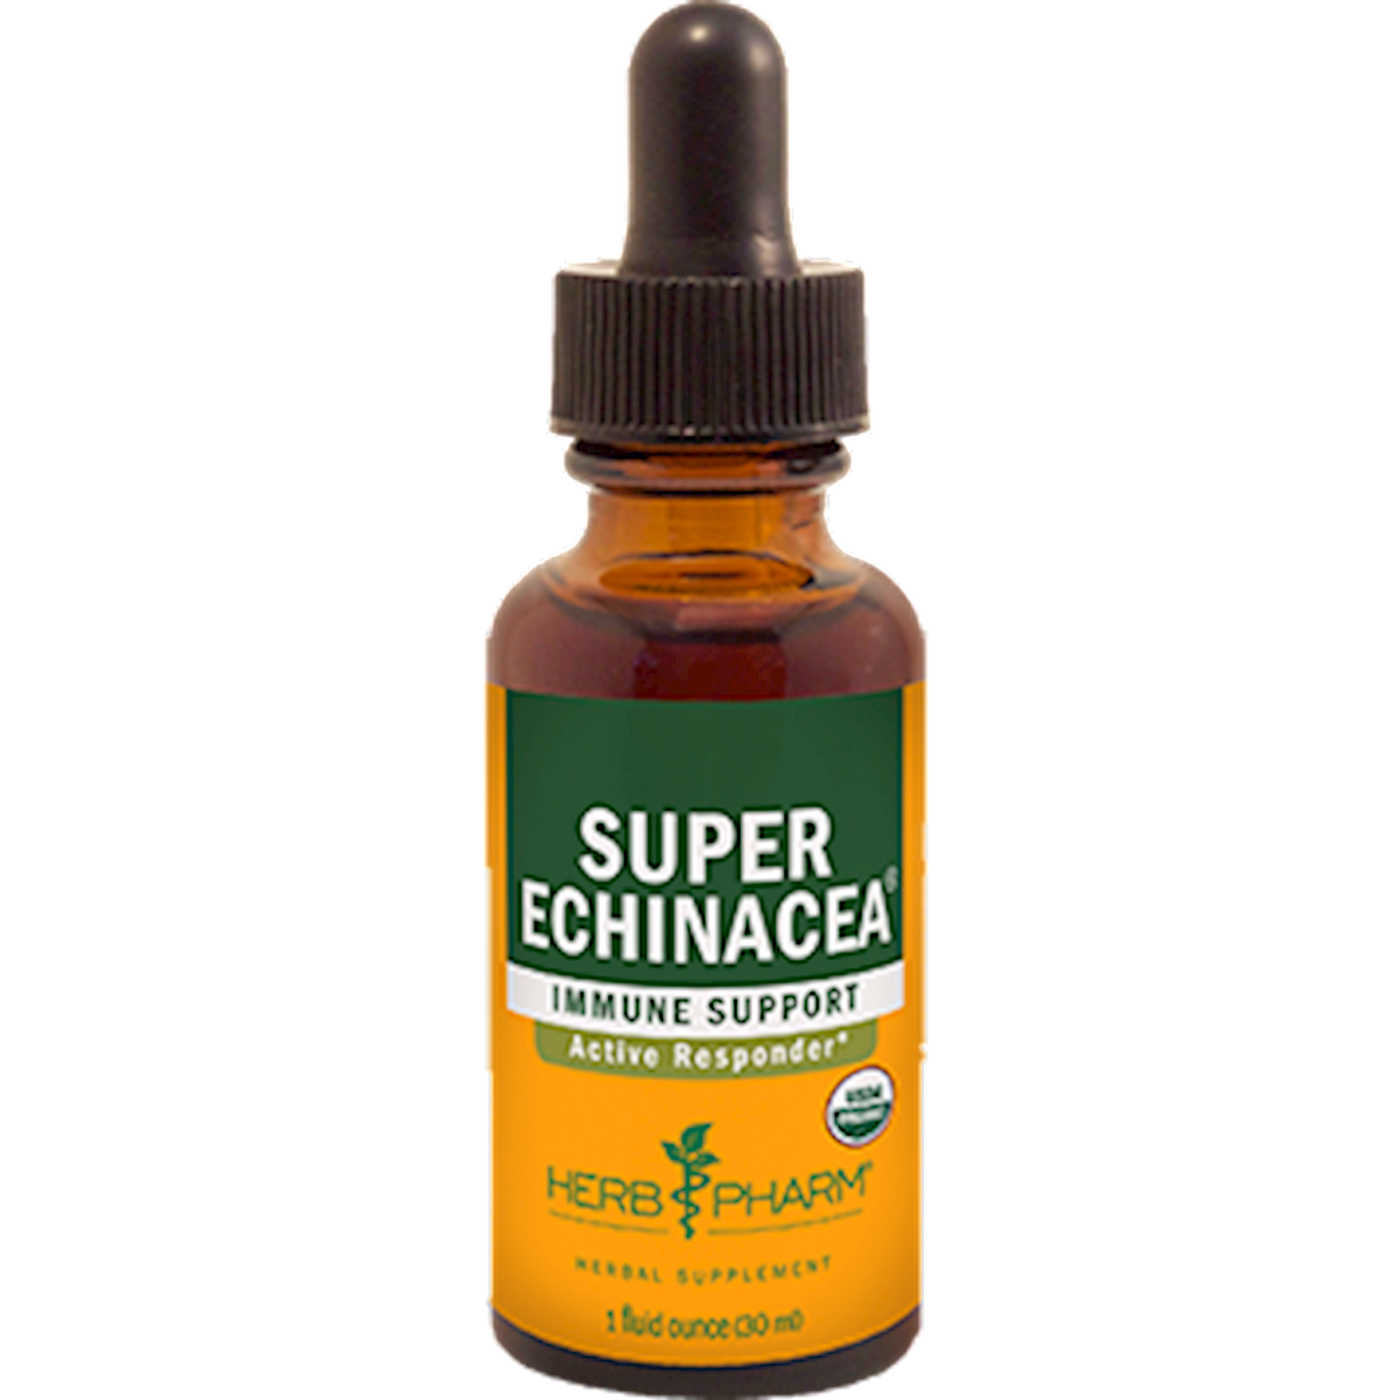 Super Echinacea  Curated Wellness